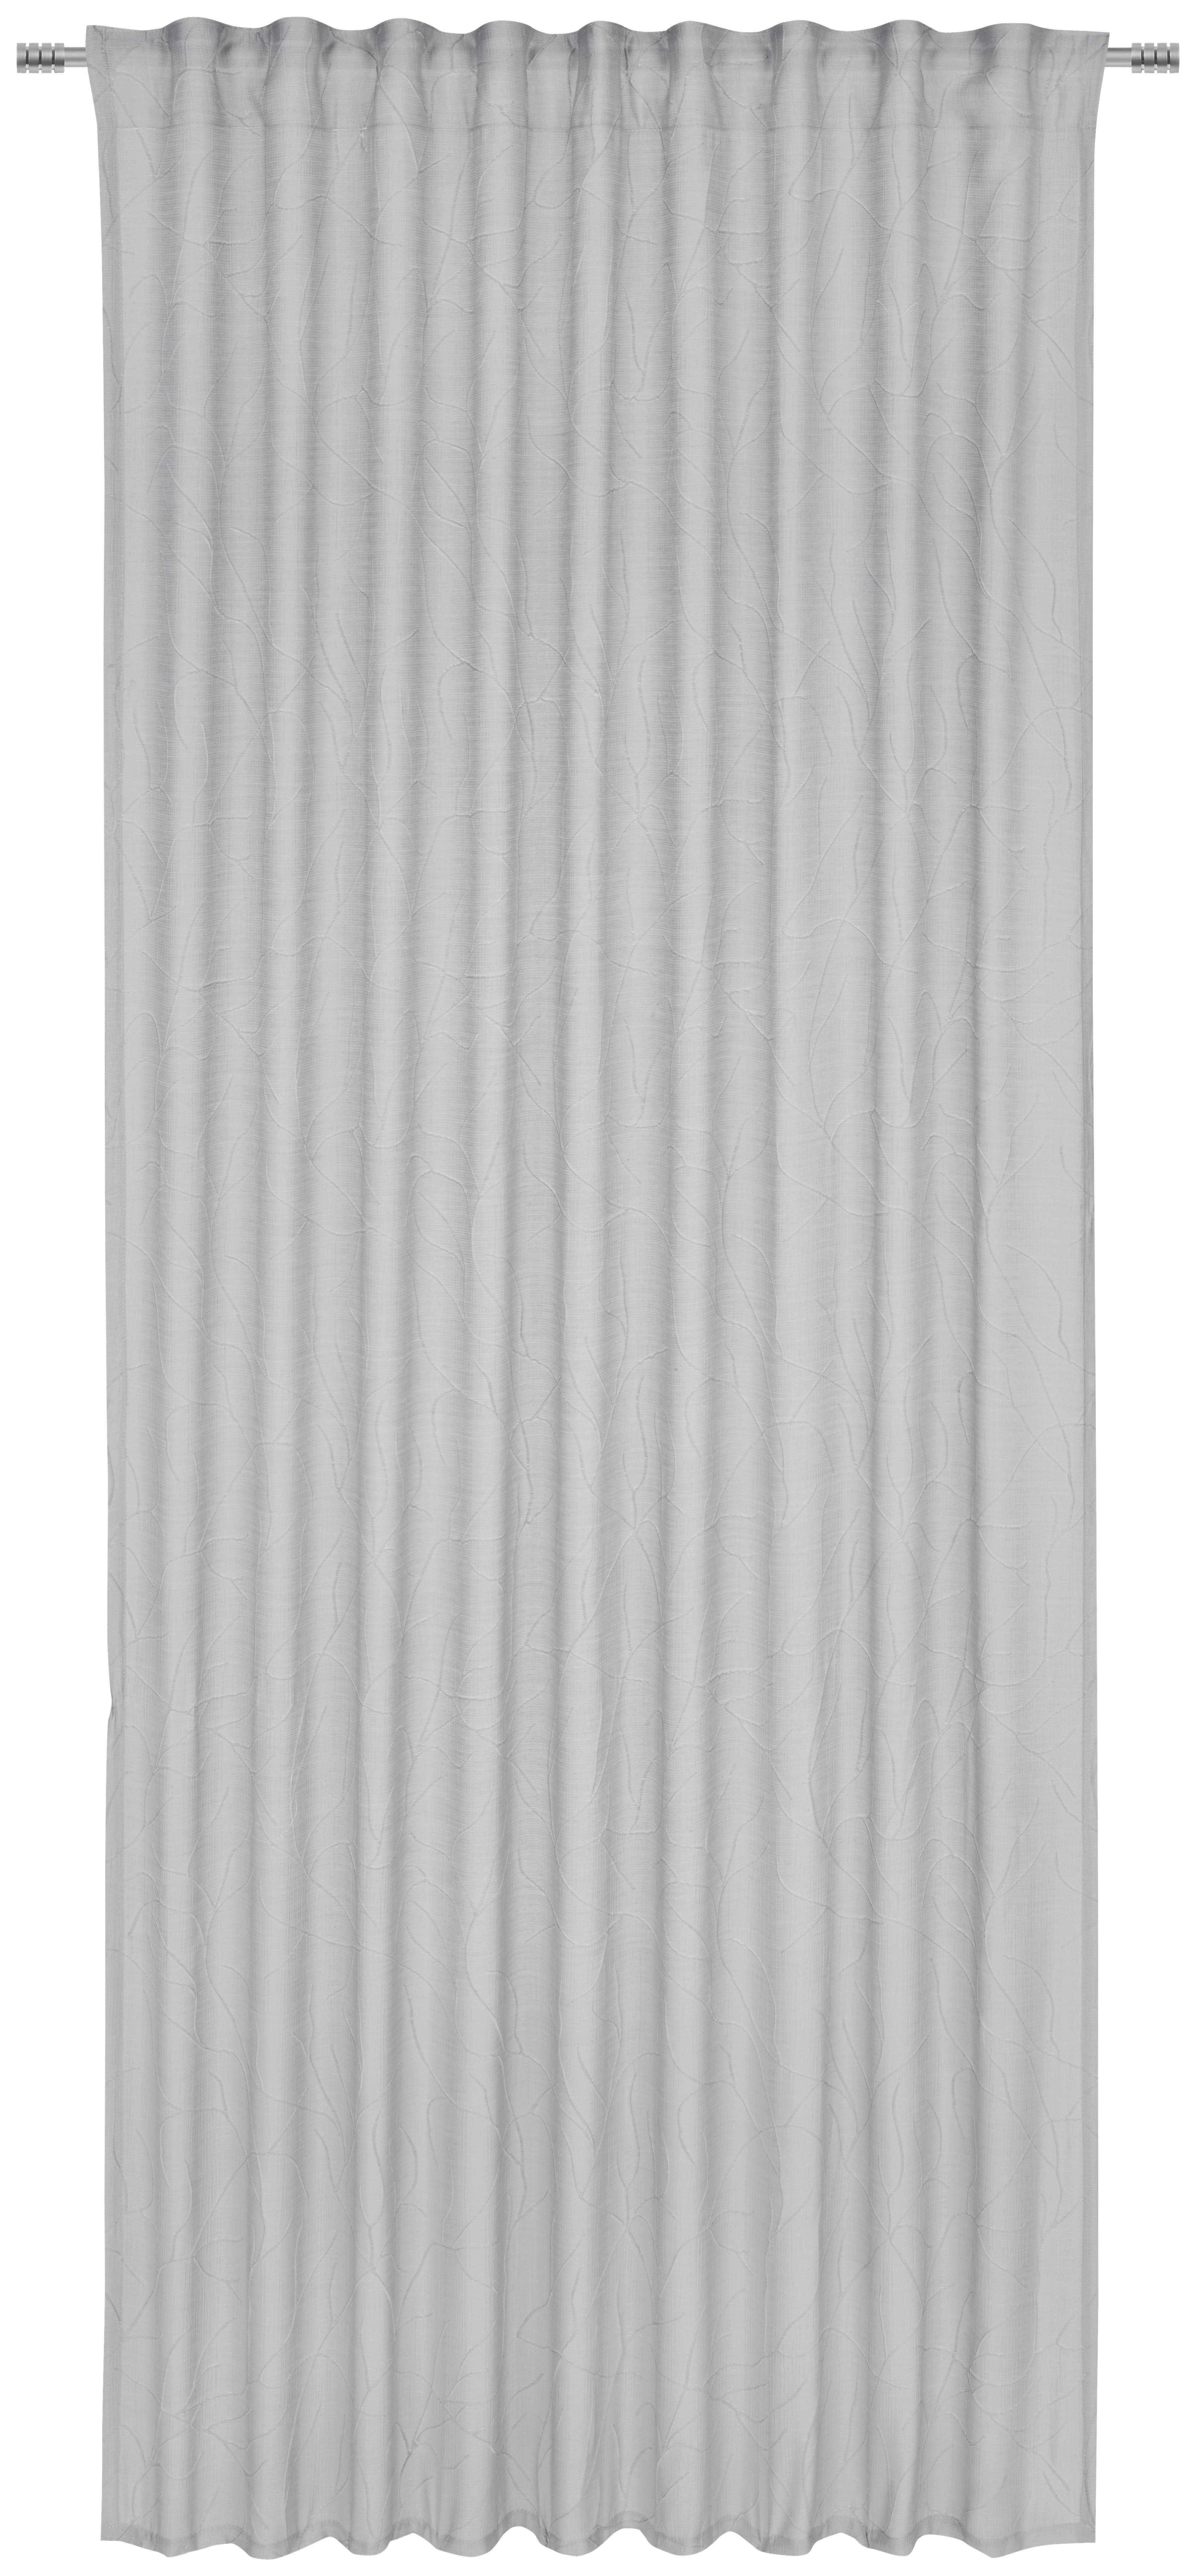 FERTIGVORHANG TAINATE halbtransparent 135/245 cm   - Silberfarben, Design, Textil (135/245cm) - Esposa